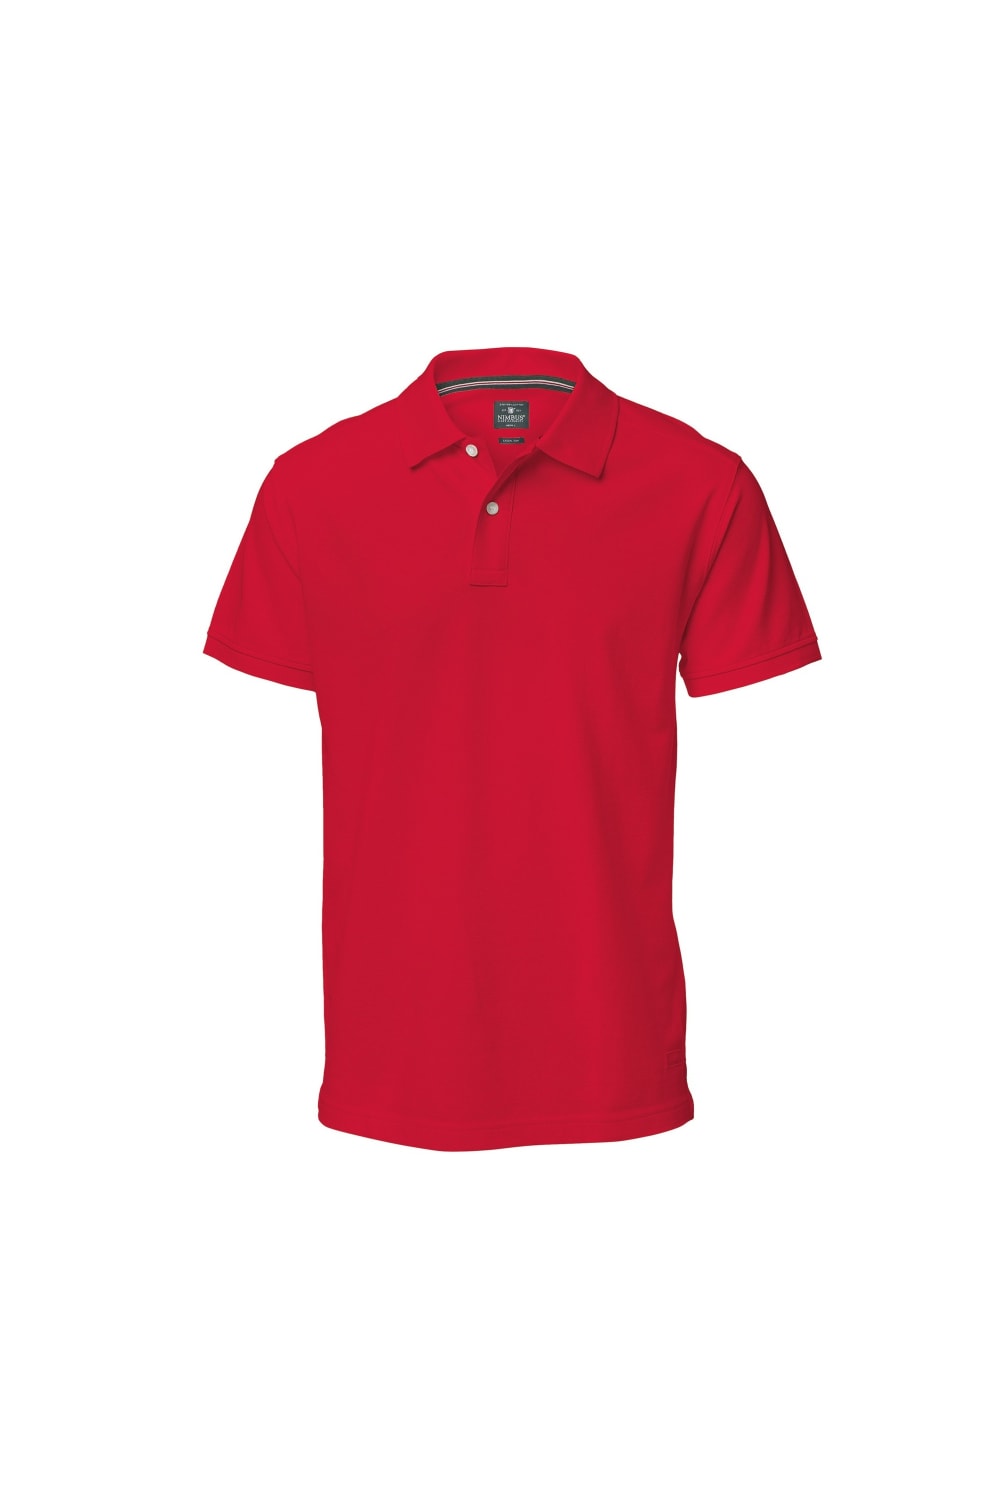 Nimbus Mens Yale Short Sleeve Polo Shirt (Red)